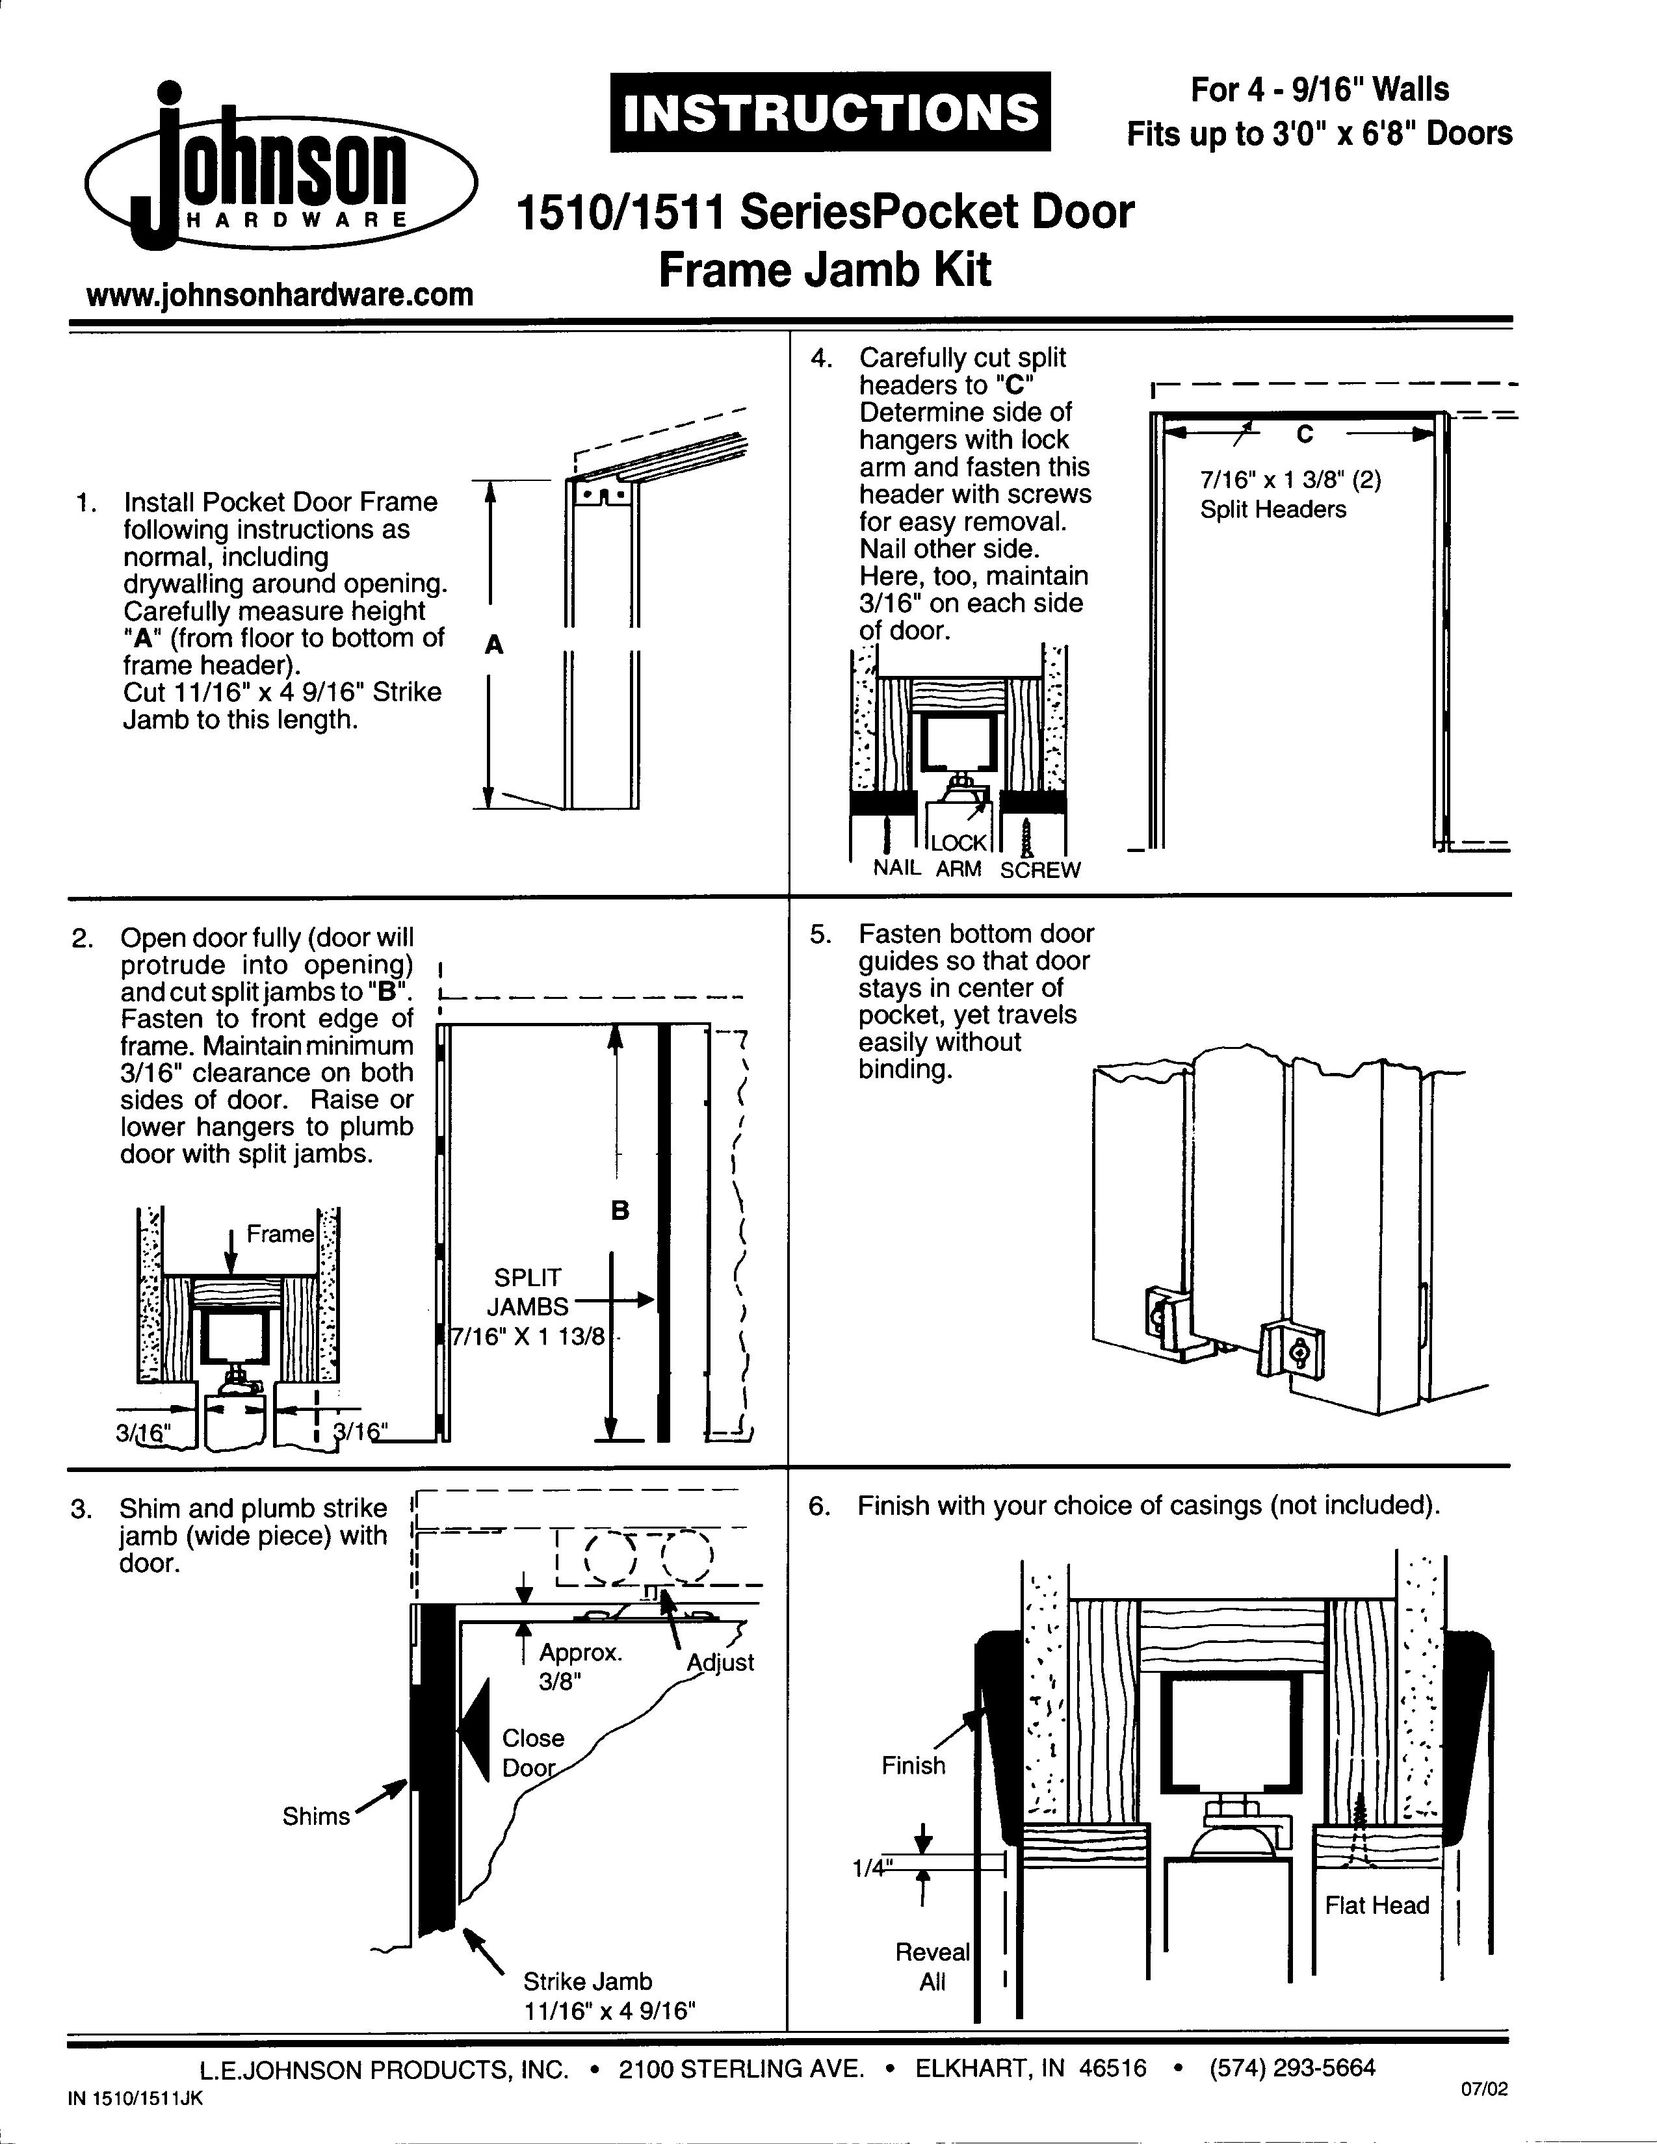 Johnson Hardware 1511 Series Door User Manual